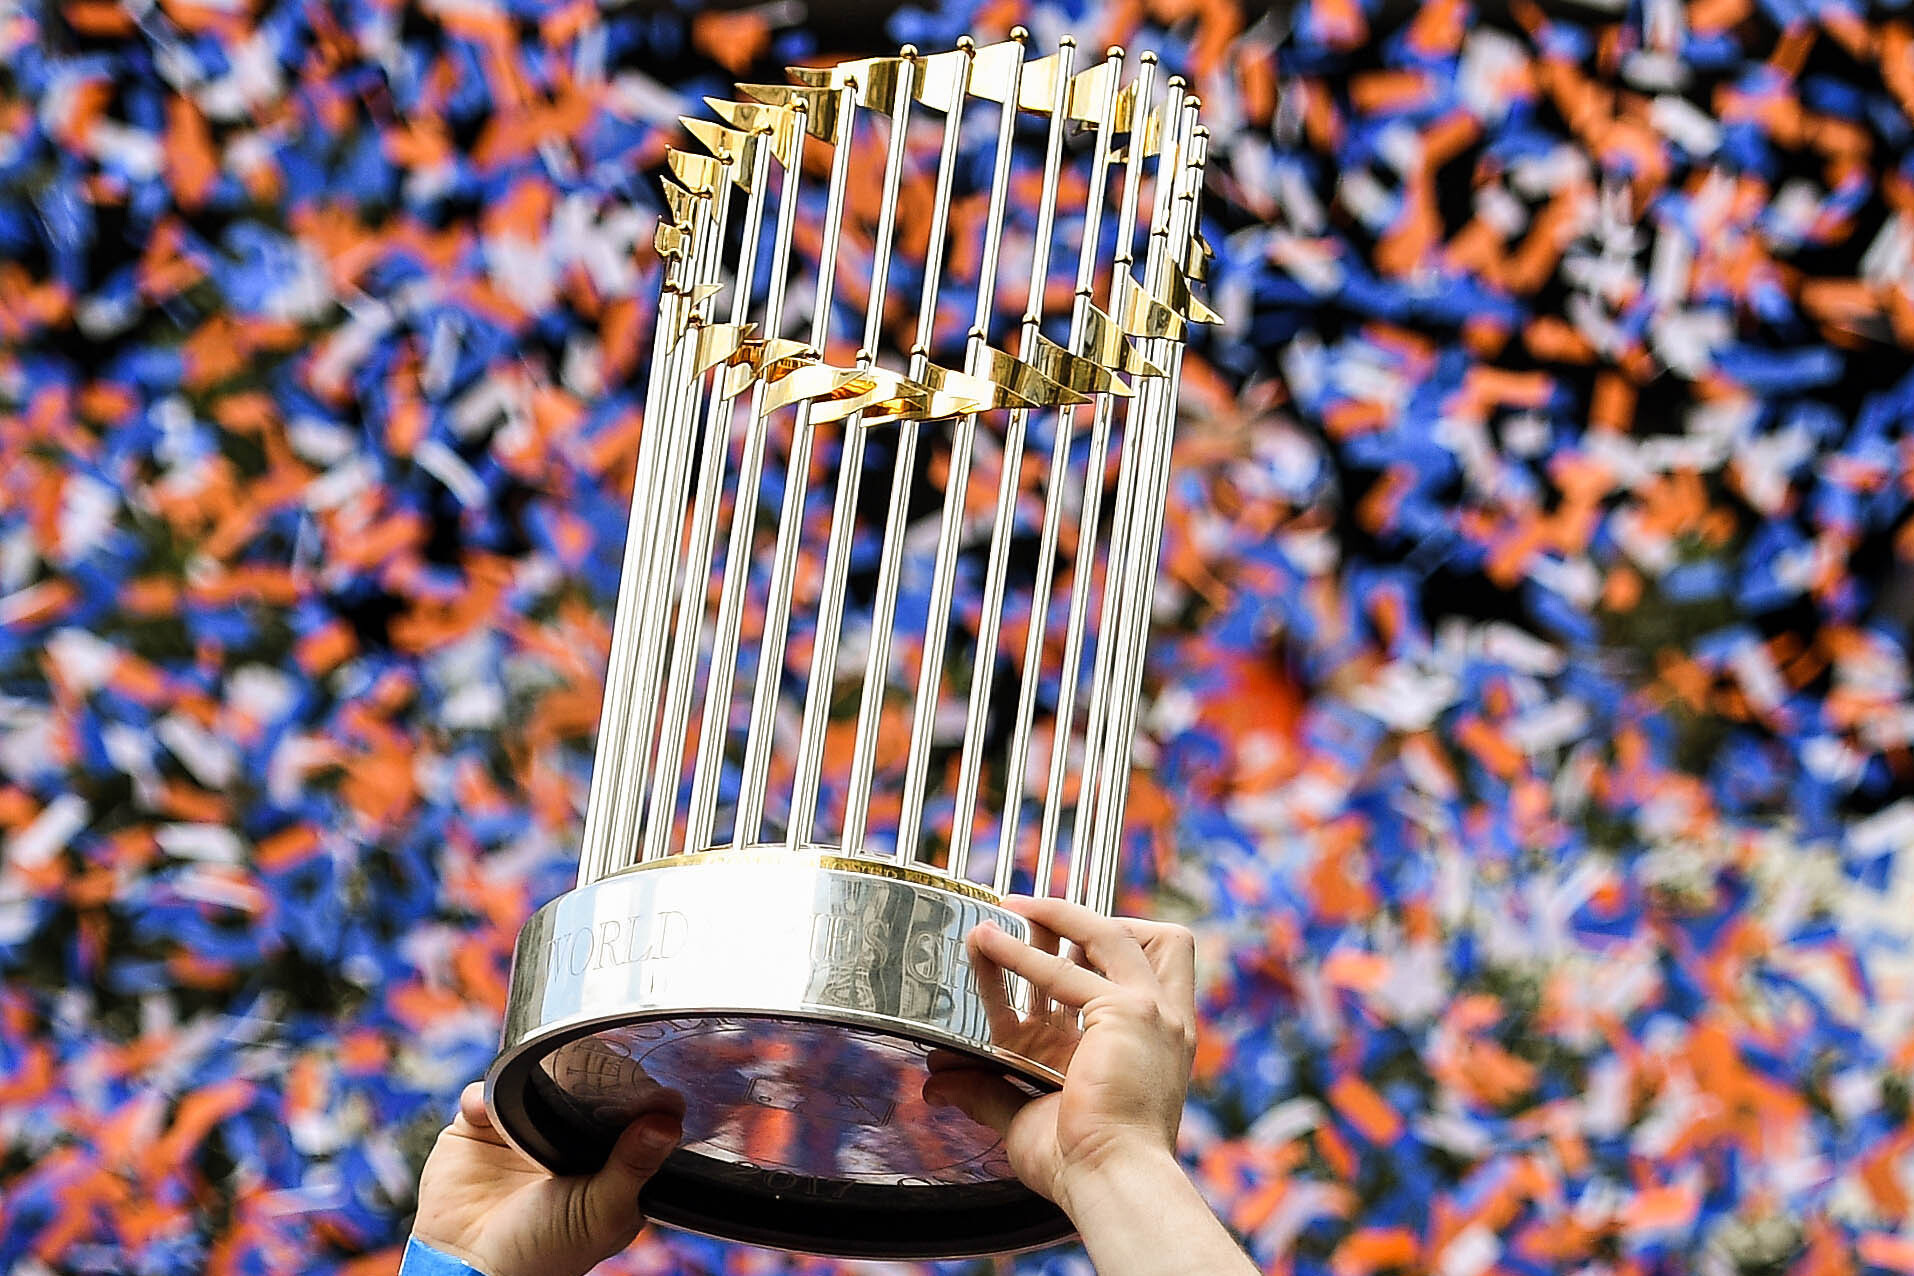 Houston Astros World Series Champions 2022 Team Signatures Orange